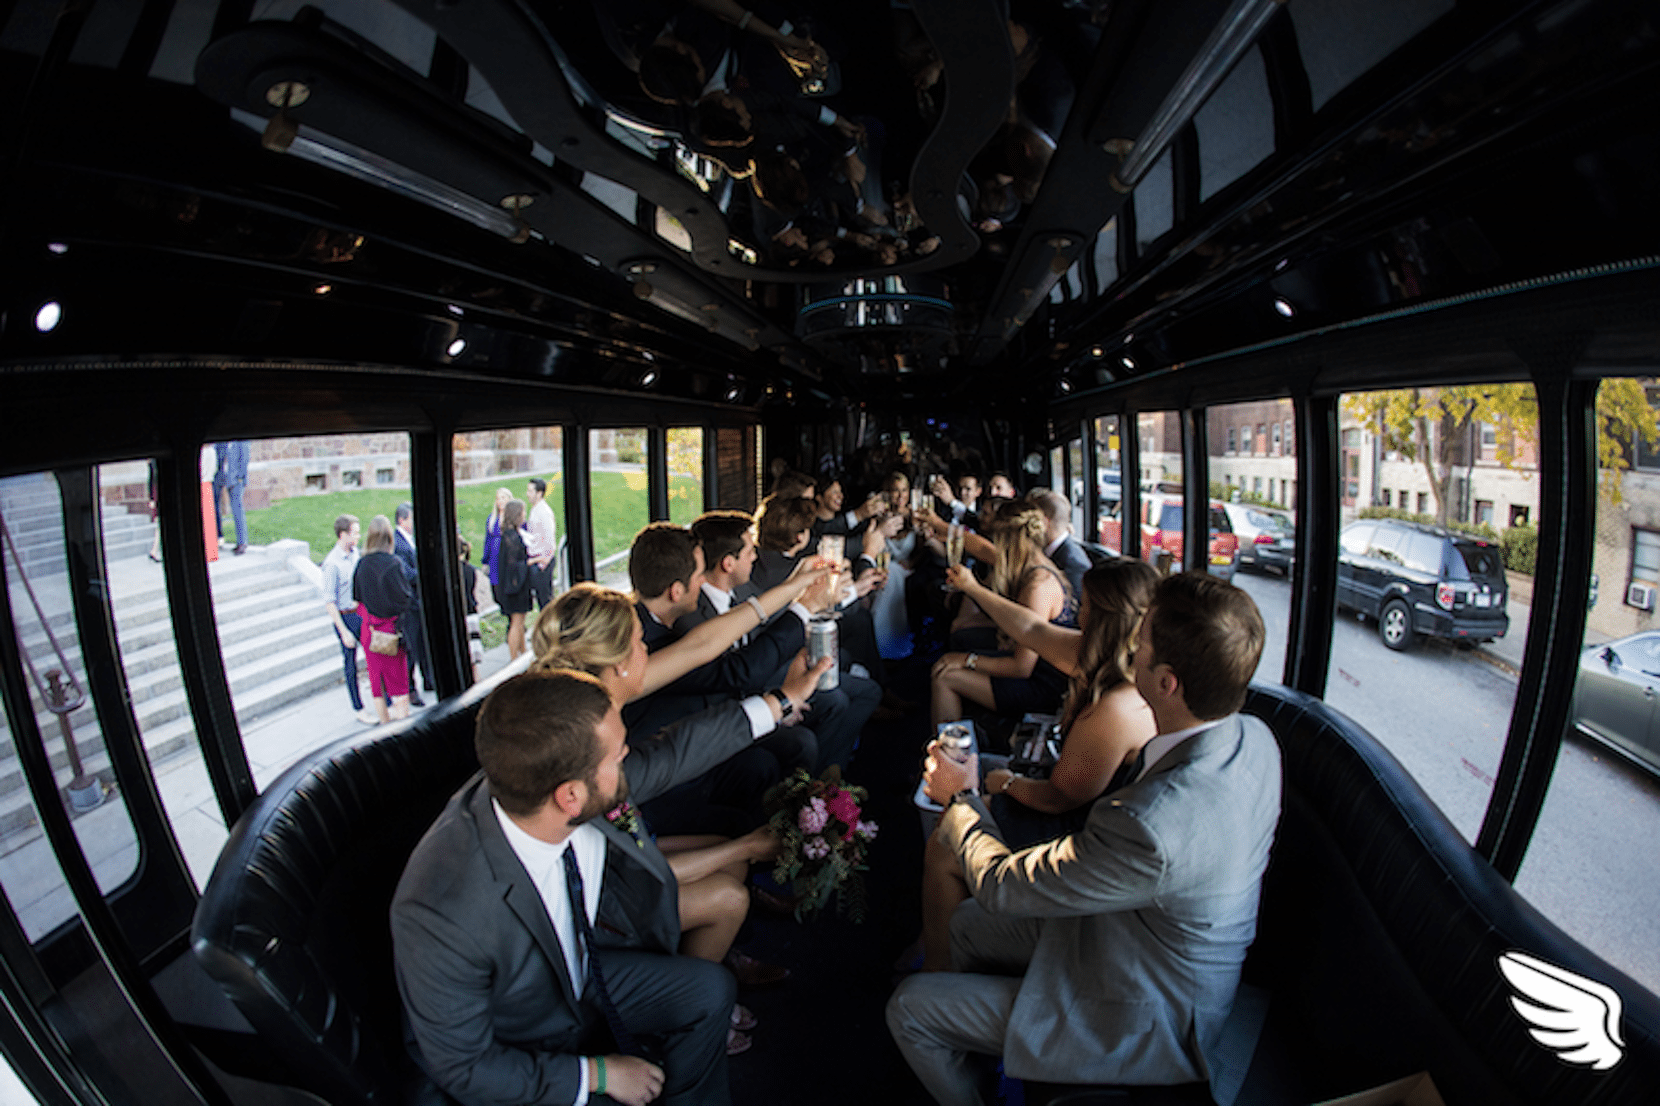 Wedding party on a skeddadle bus, toasting